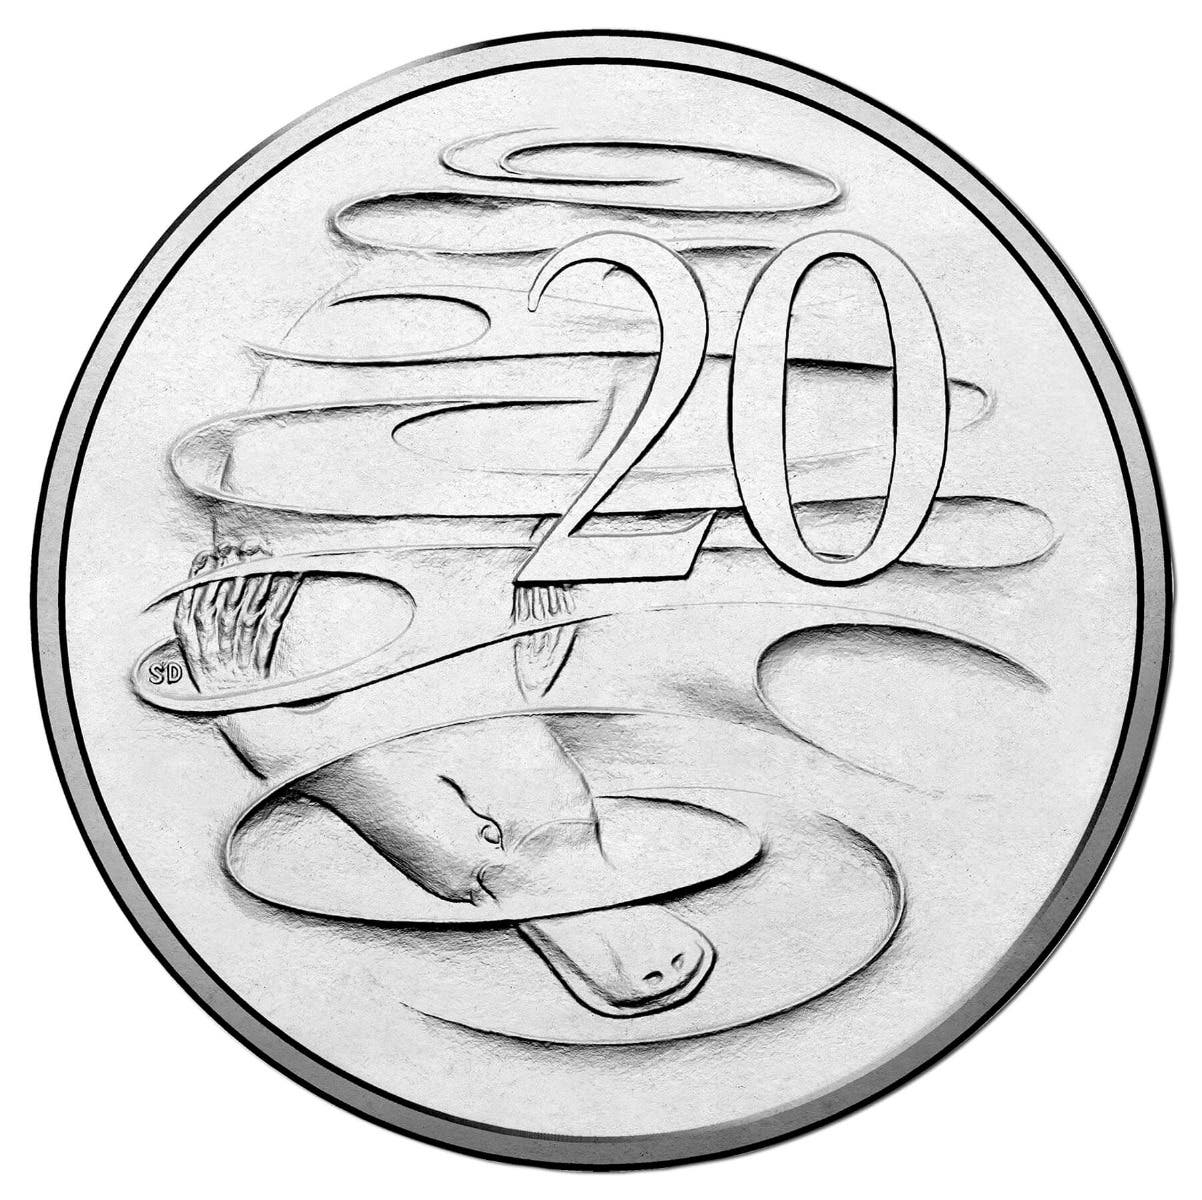 Moon Landing 50th Anniversary 2019 6-coin Mint Set